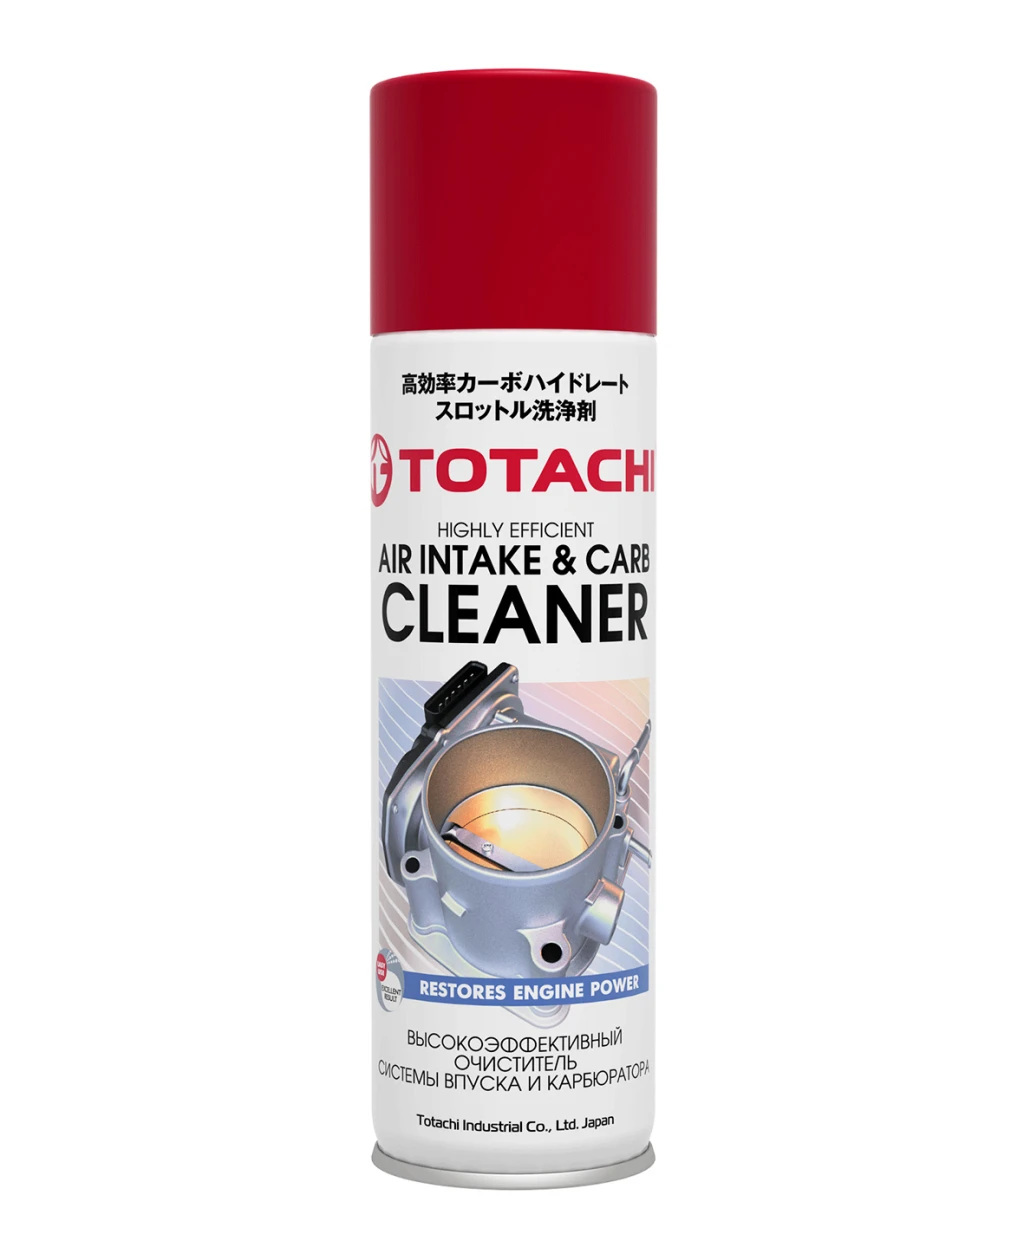 Очиститель карбюратора Totachi AIR INTAKE AND CARB CLEANER